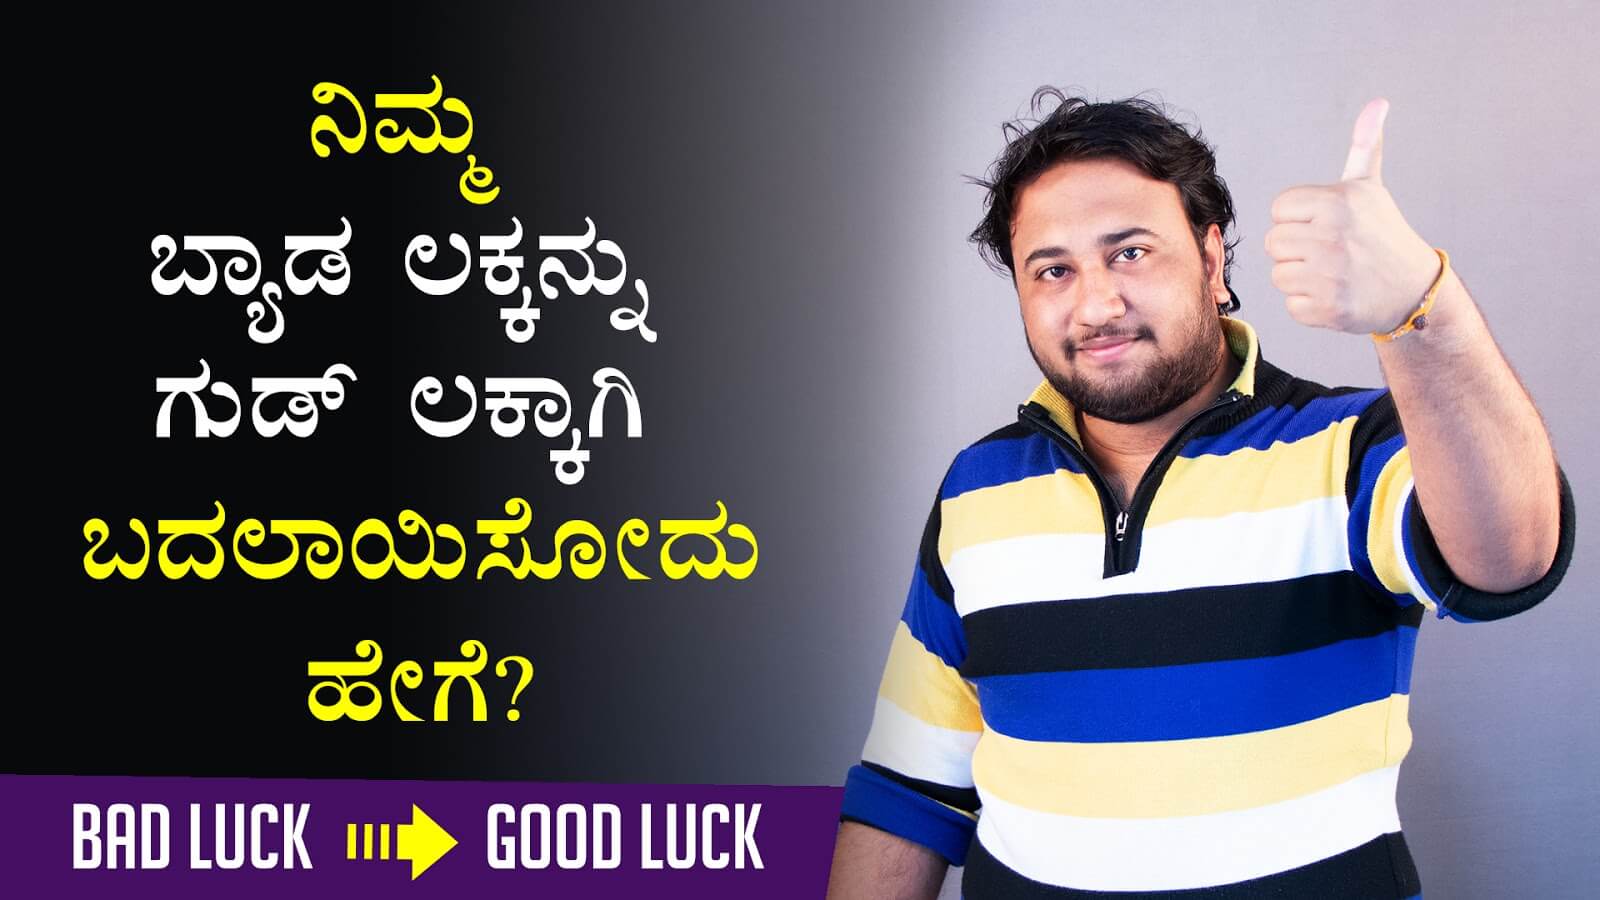 You are currently viewing ನಿಮ್ಮ ಬ್ಯಾಡ ಲಕ್ಕನ್ನು ಗುಡ್ ಲಕ್ಕಾಗಿ ಬದಲಾಯಿಸೋದು ಹೇಗೆ? – How to convert your Bad Luck into Good Luck? in Kannada